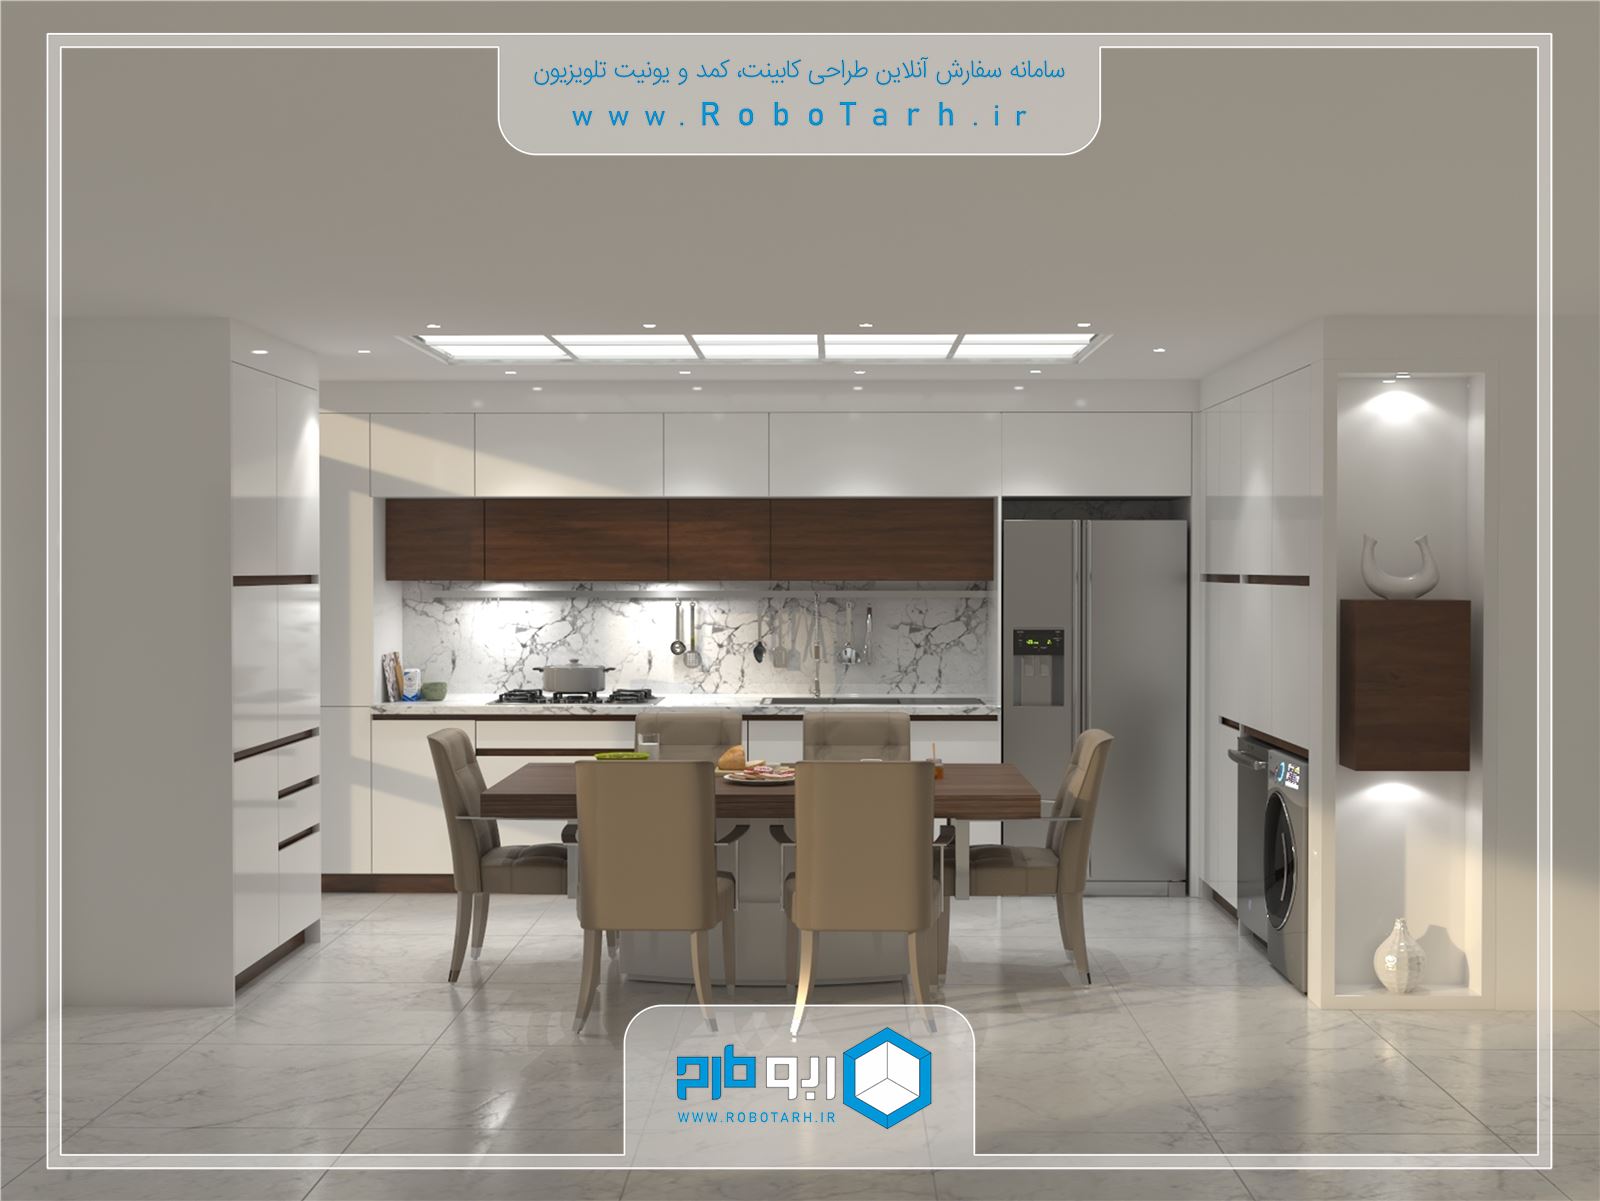 طراحی کابینت آشپزخانه مدرن با رنگ روشن - ربوطرح